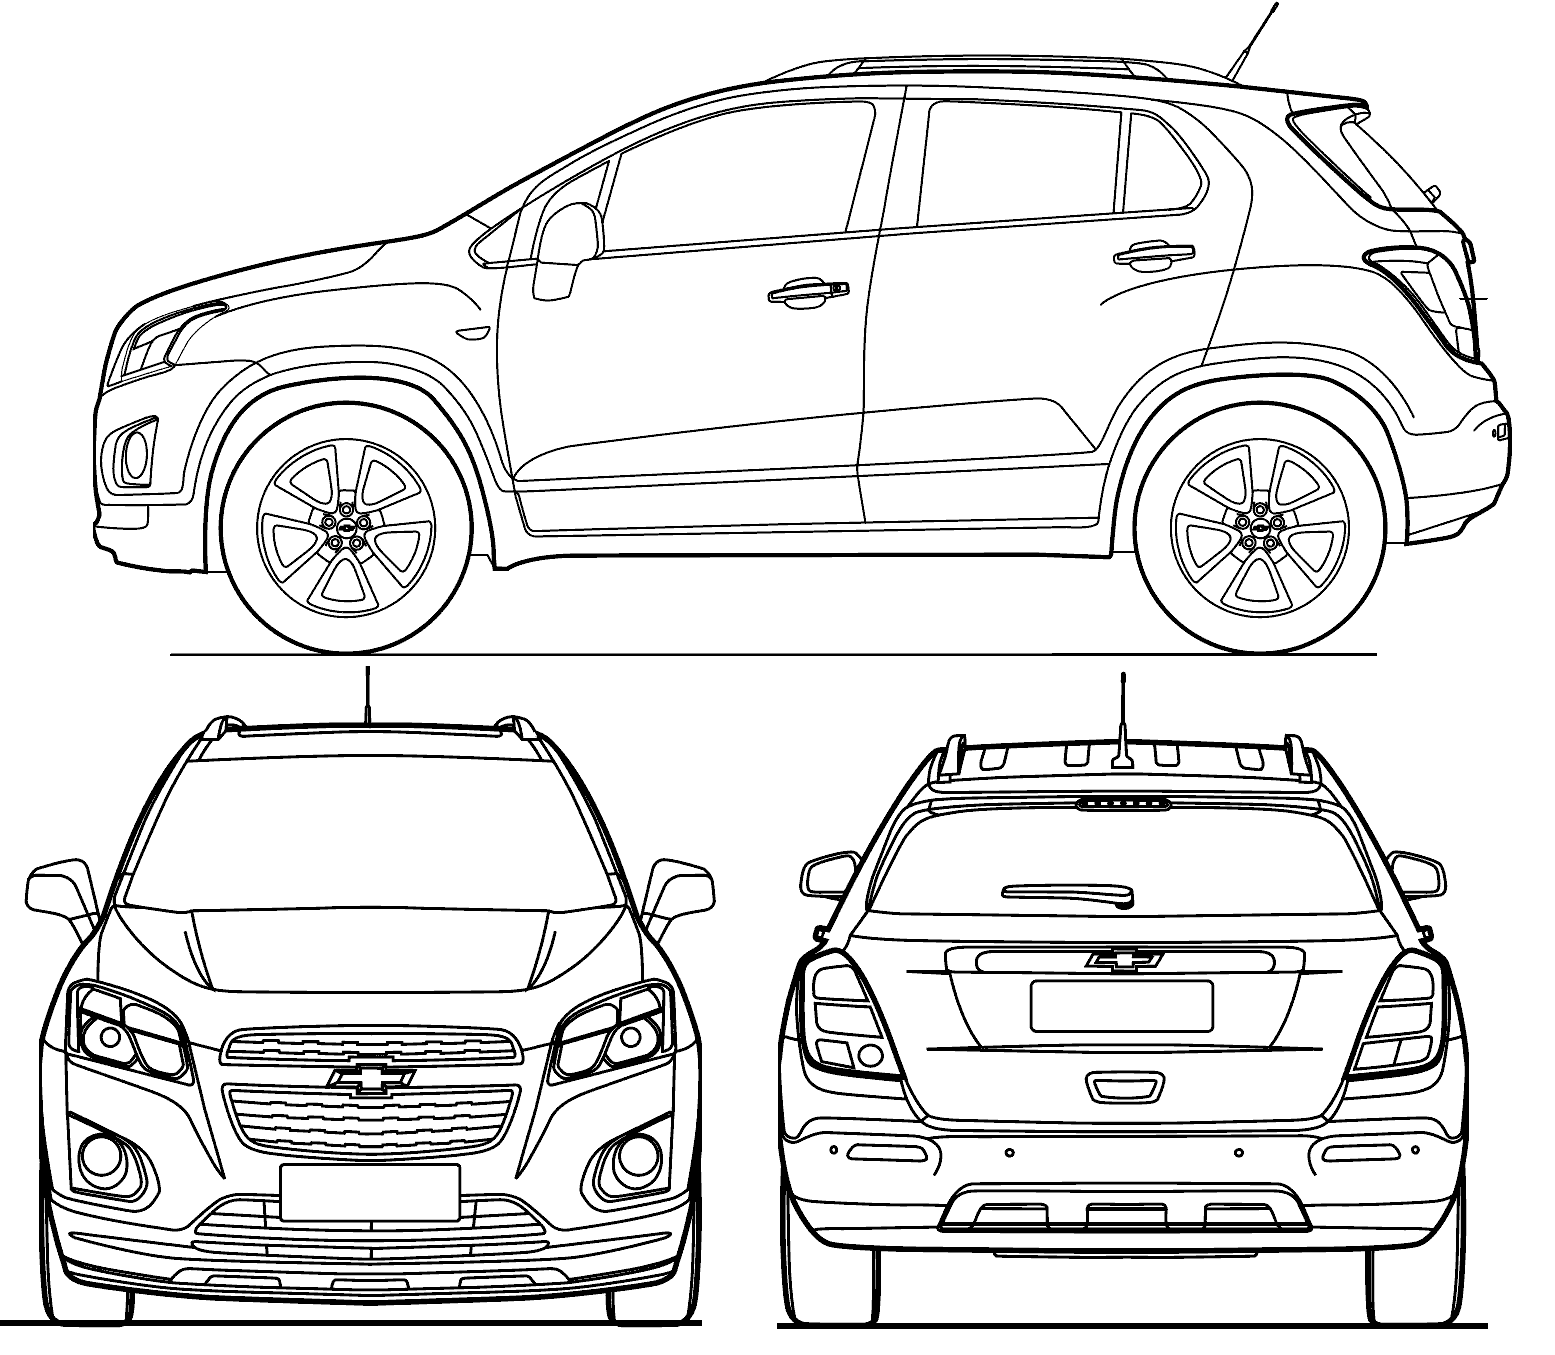 Chevrolet Trax blueprint